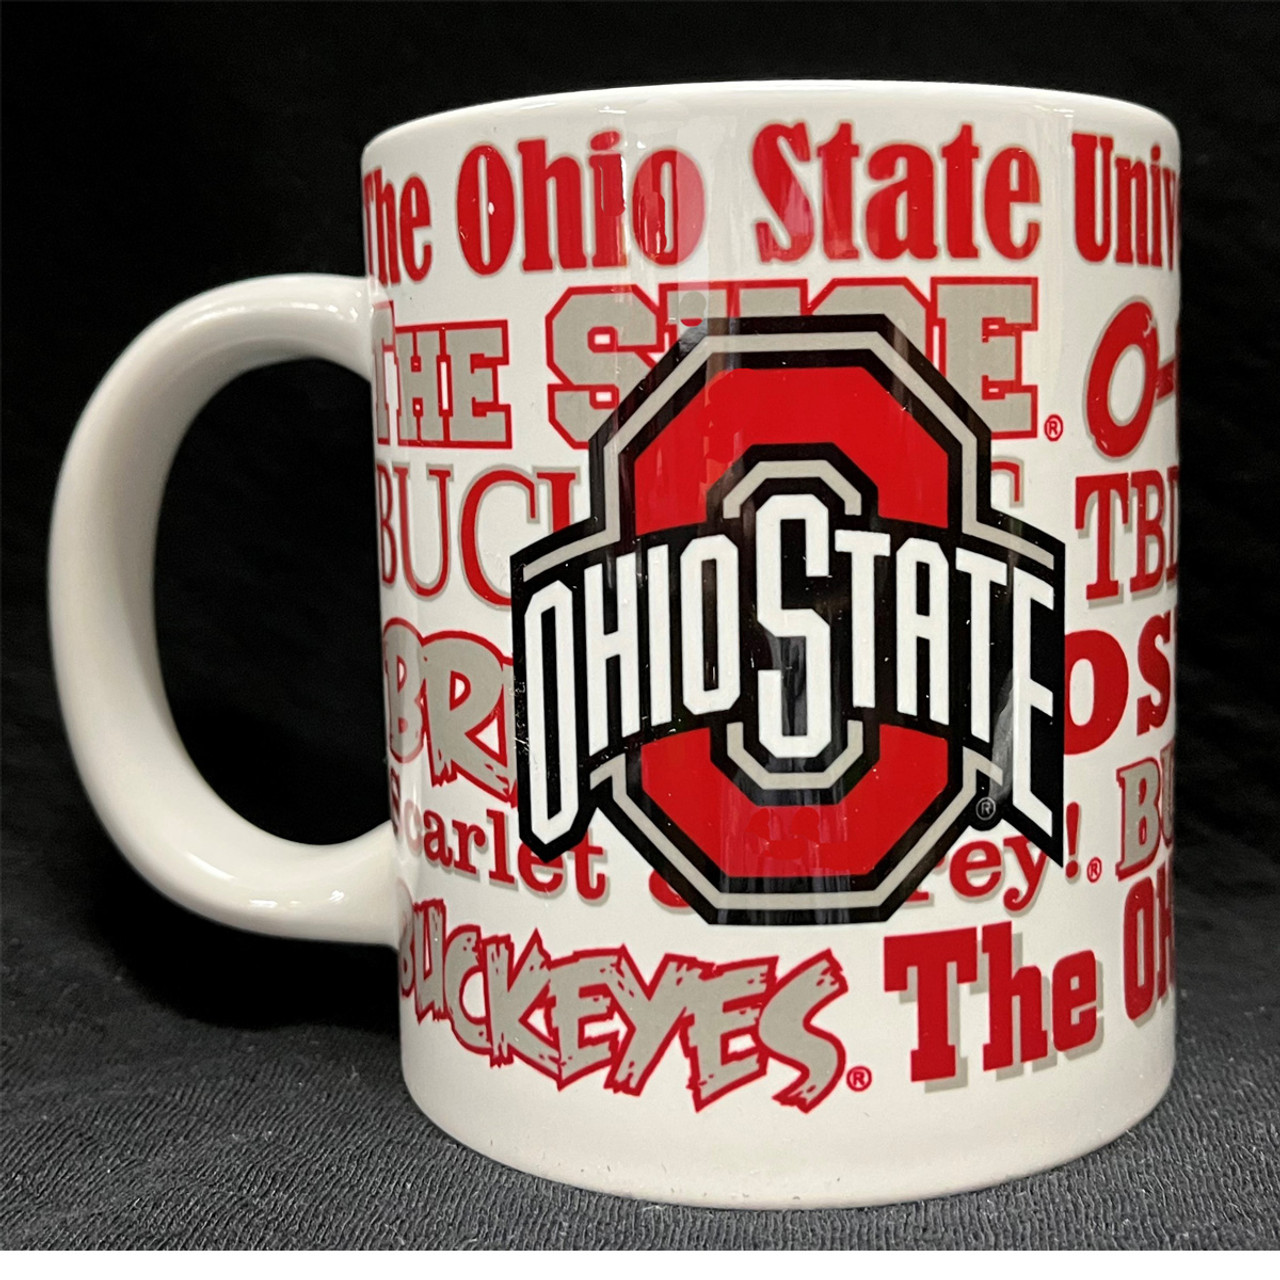 Officially Licensed NCAA 20 oz. Roadie Travel Mug w/Handle-Ohio State